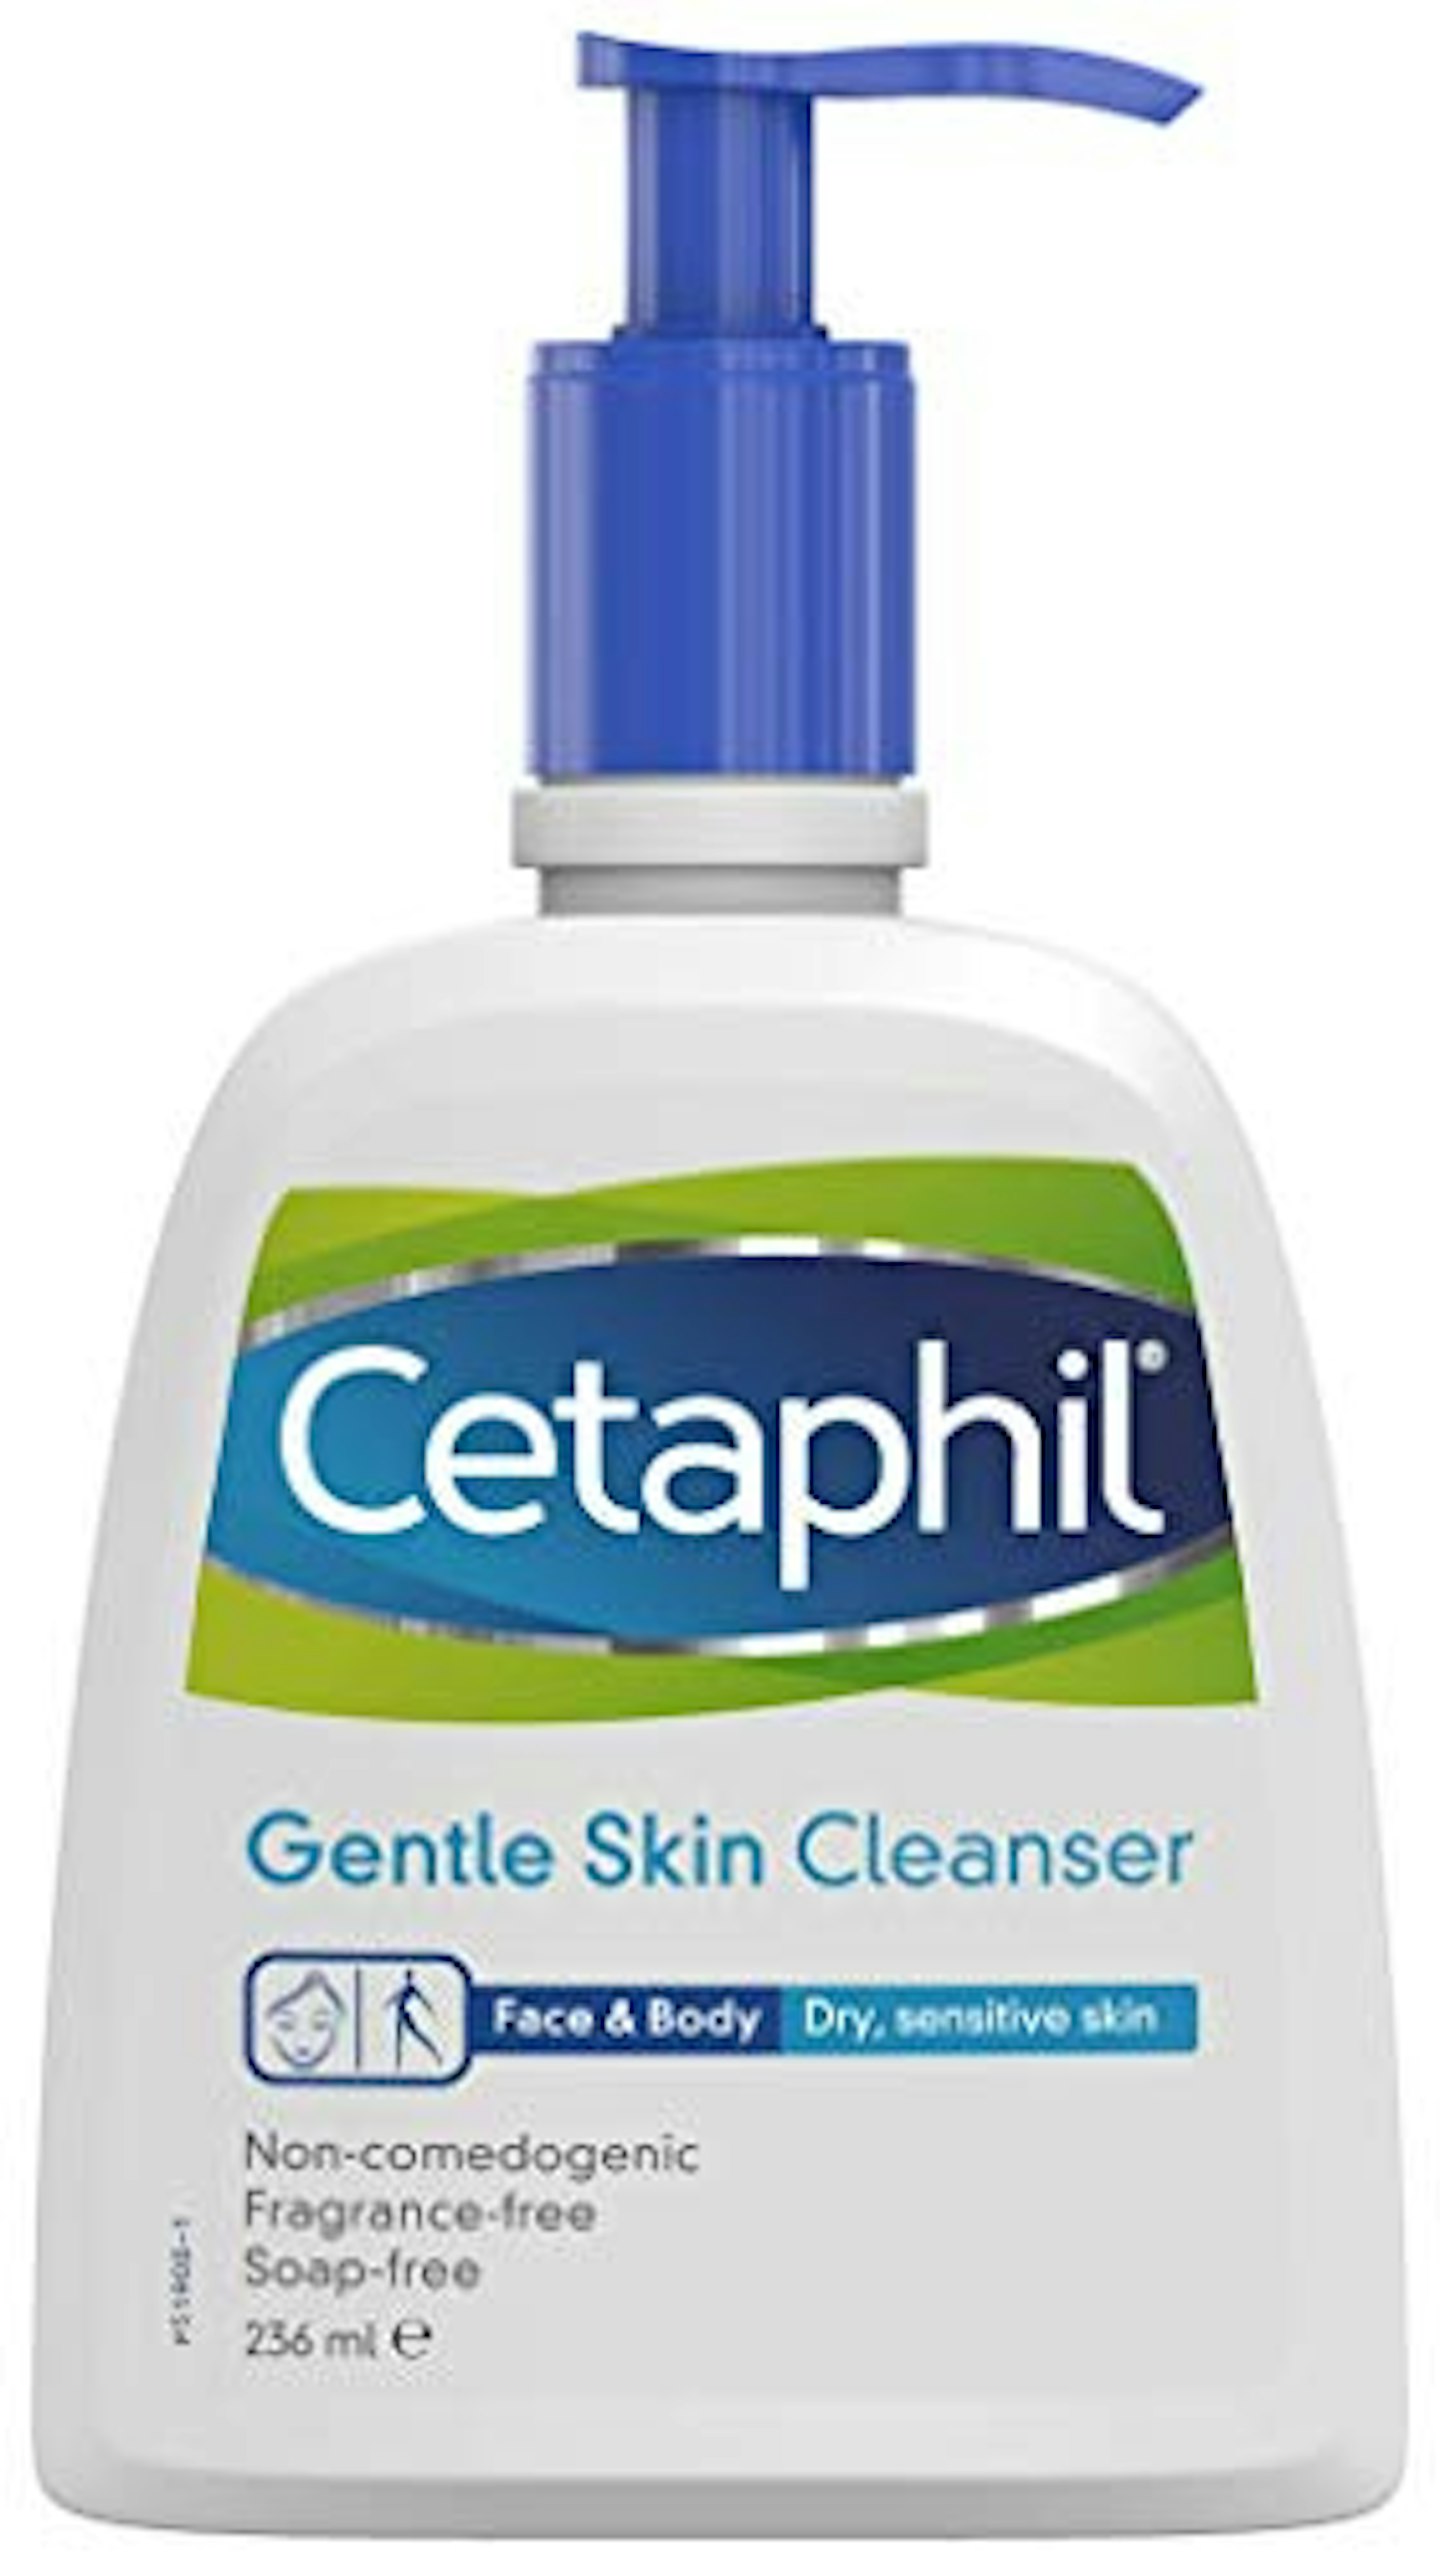 Cetaphil 236 ml Gentle Skin Cleanser